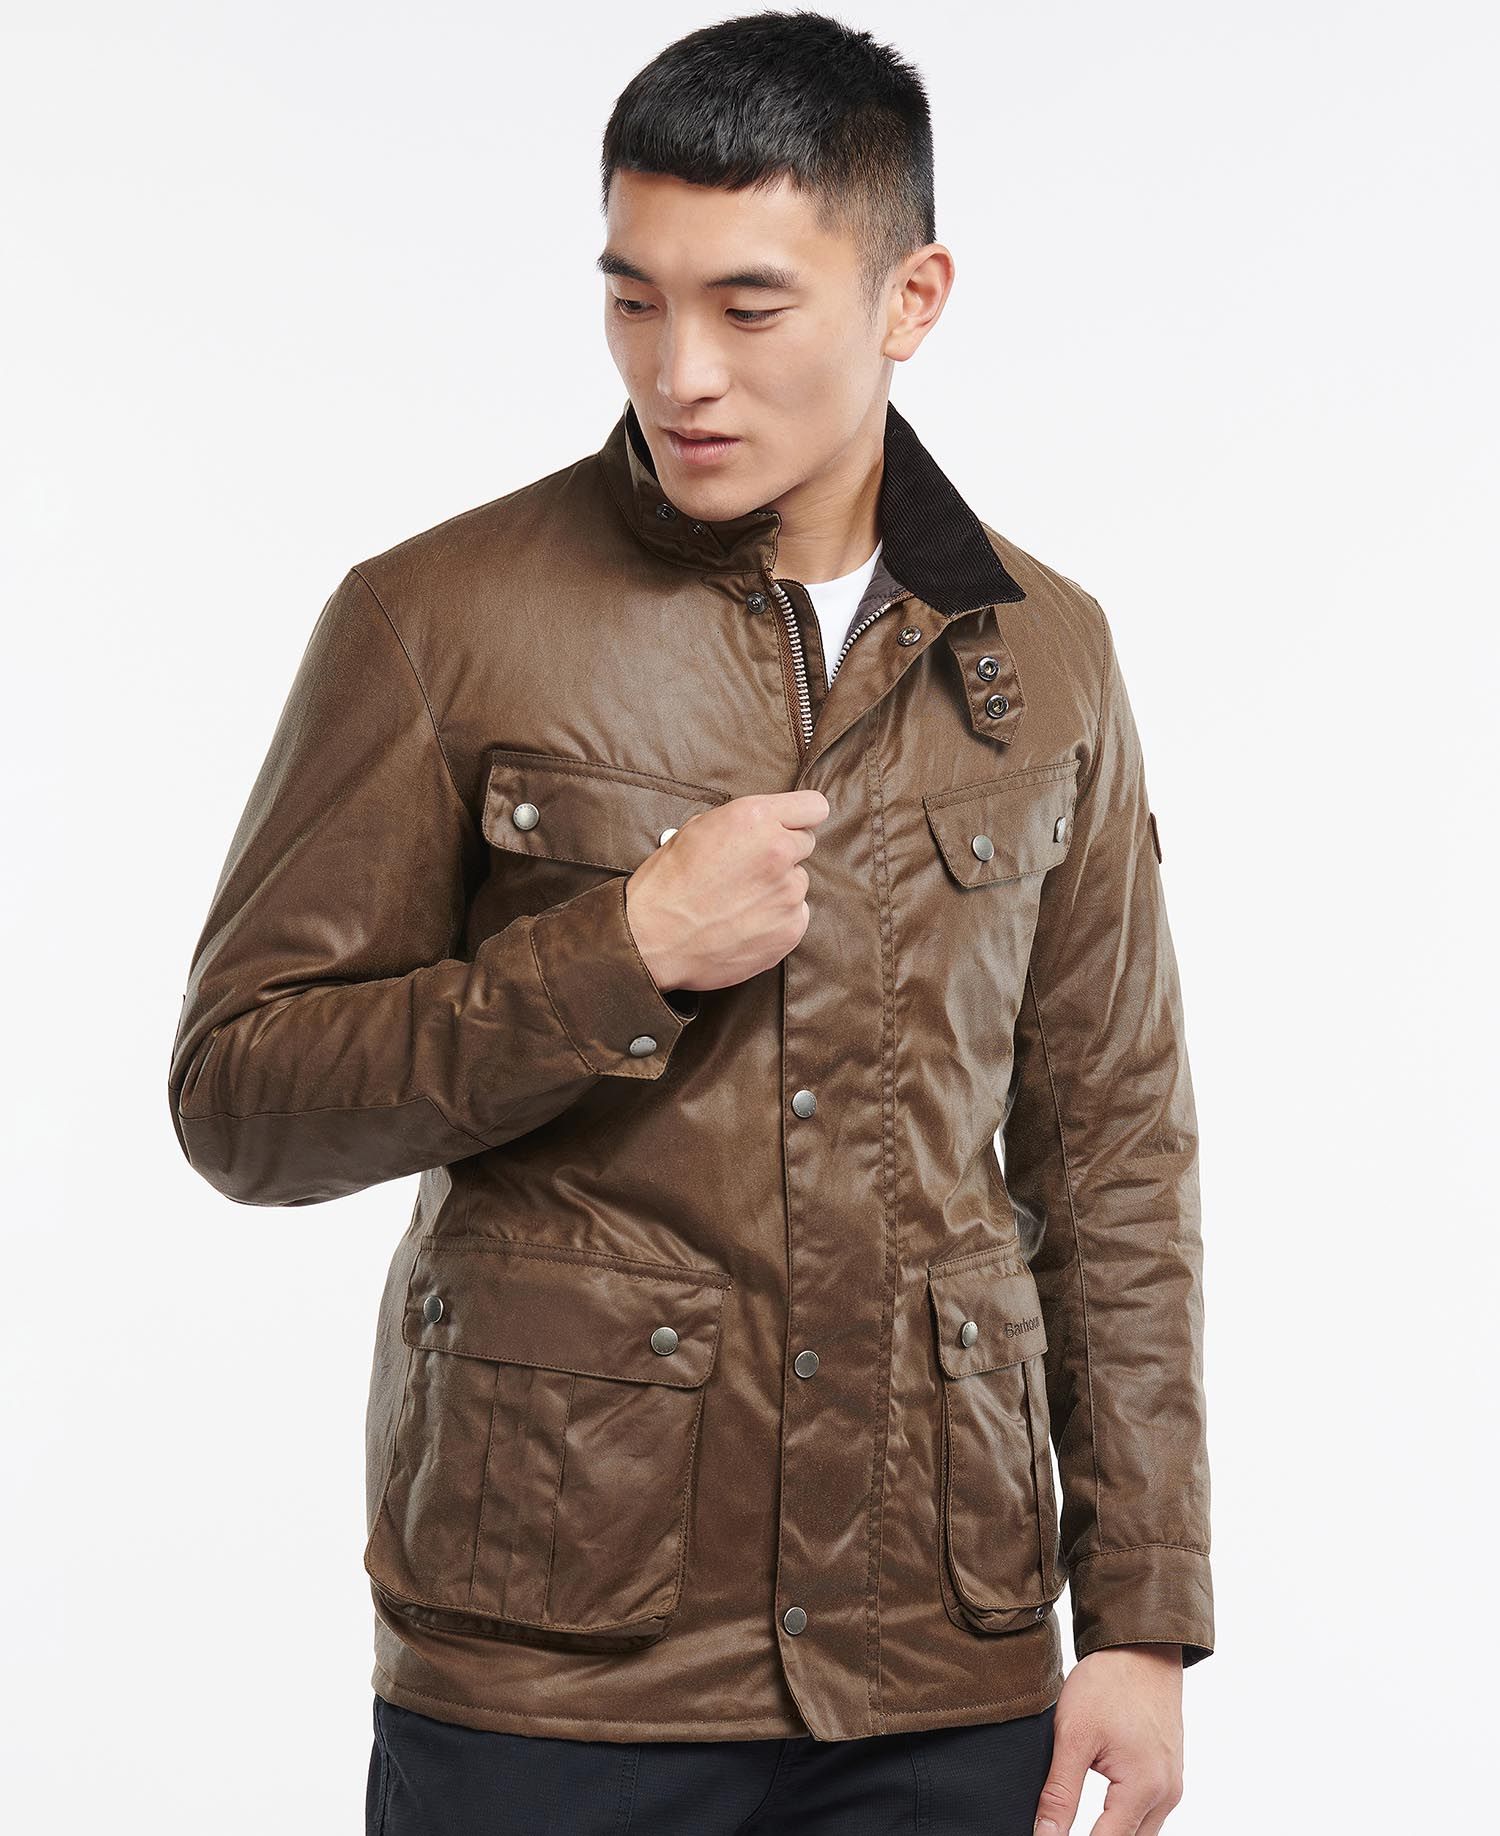 543-duke wax jacket brown